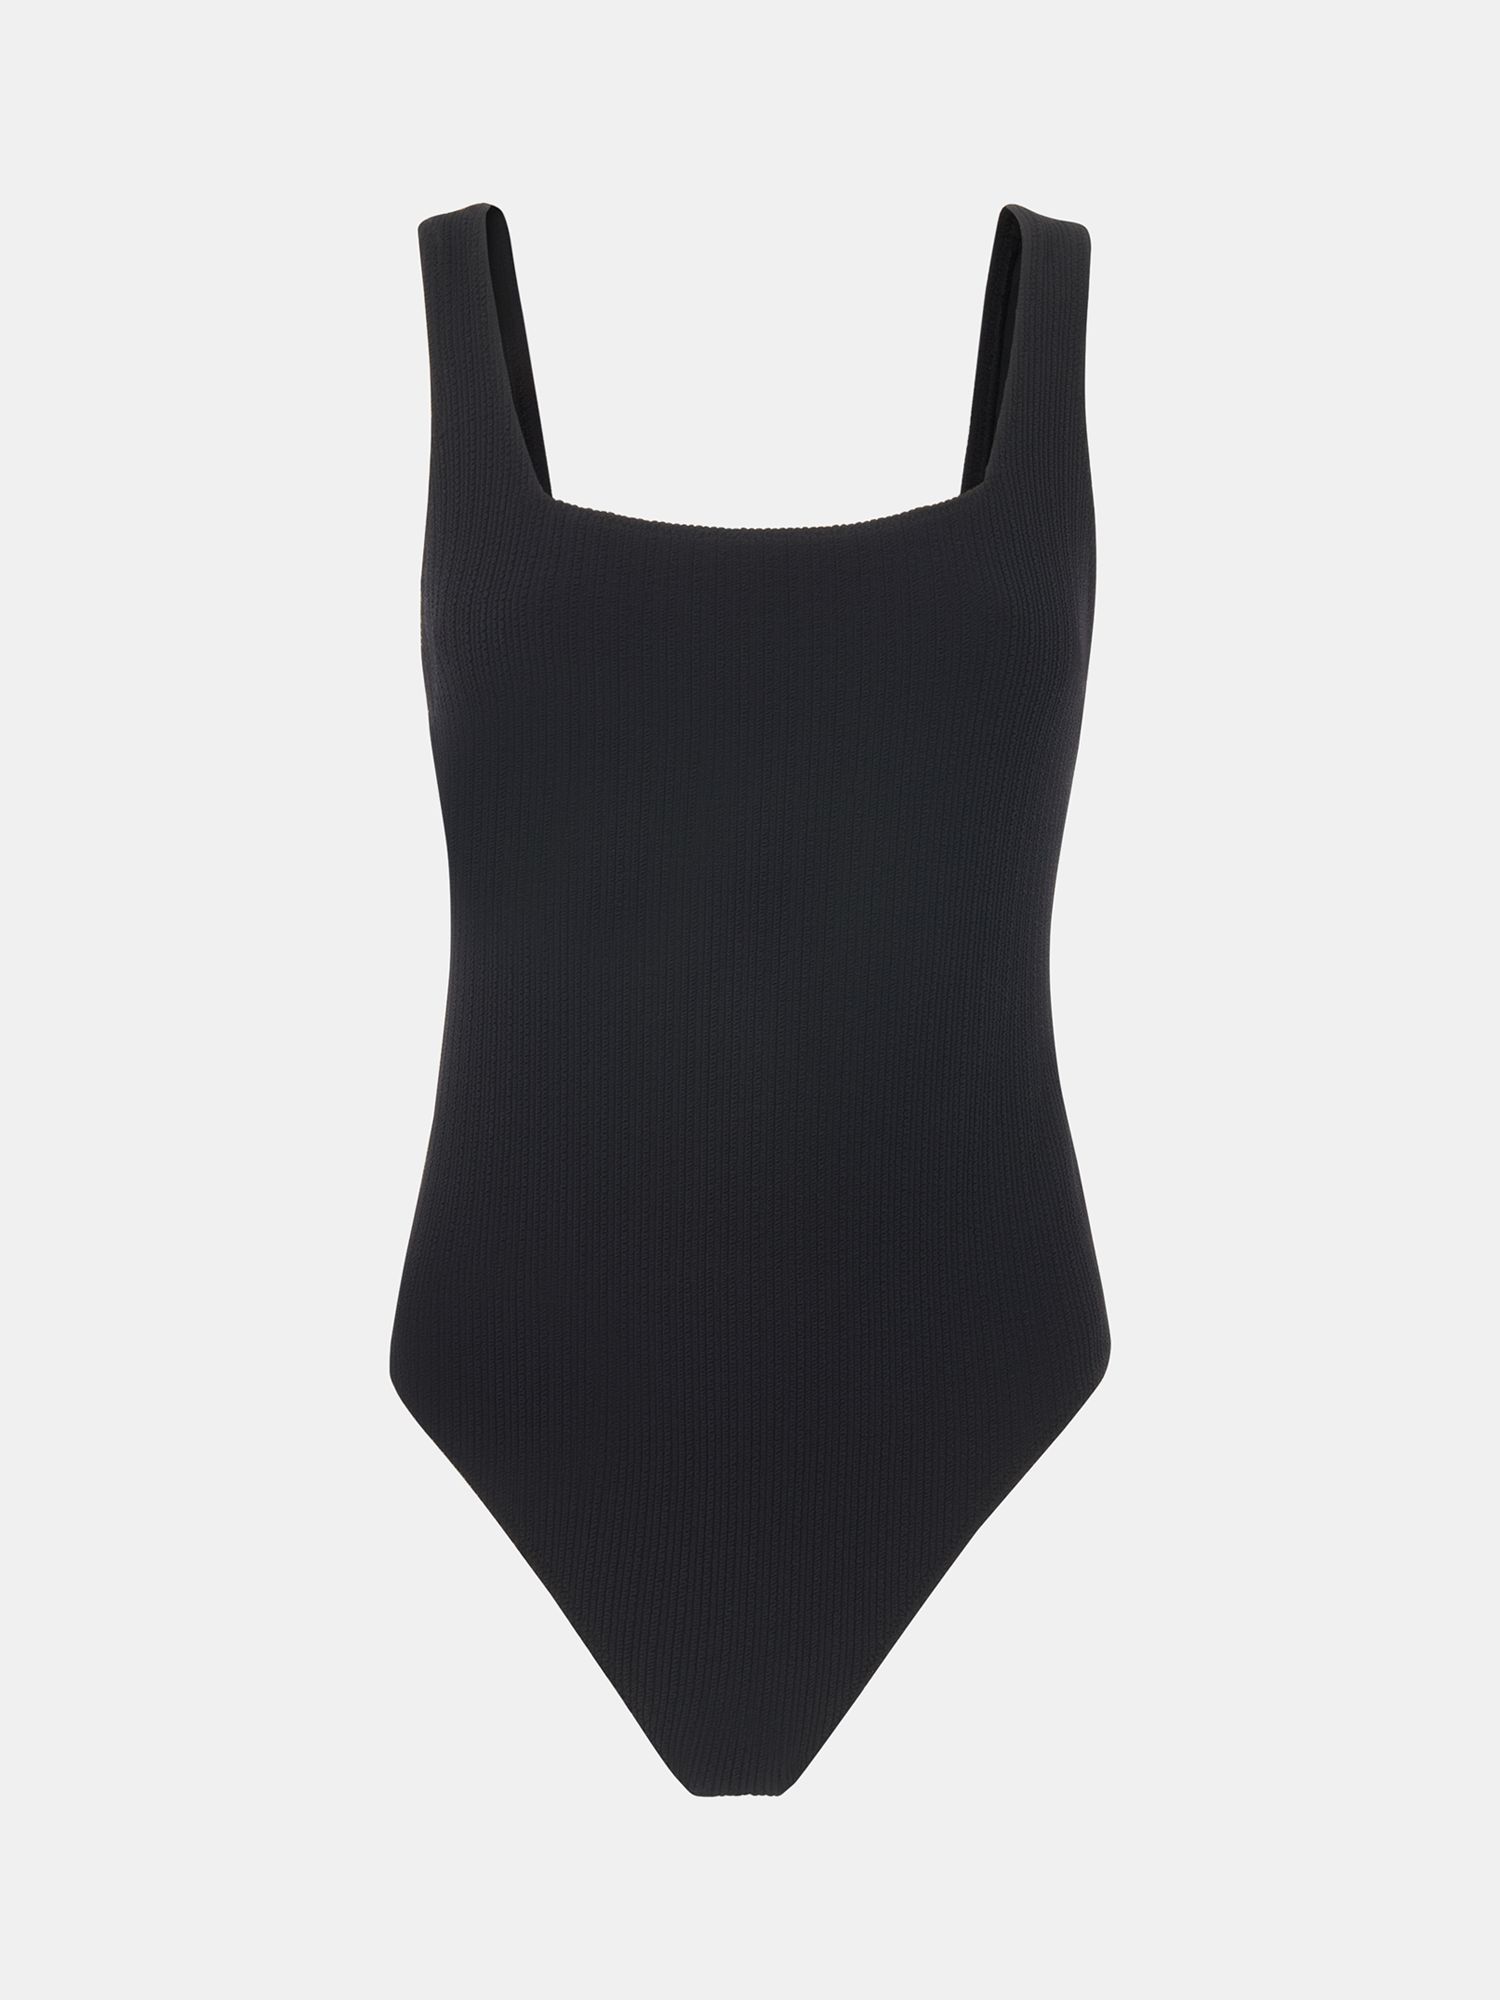 Whistles Square Neck Swimsuit, Black, 6